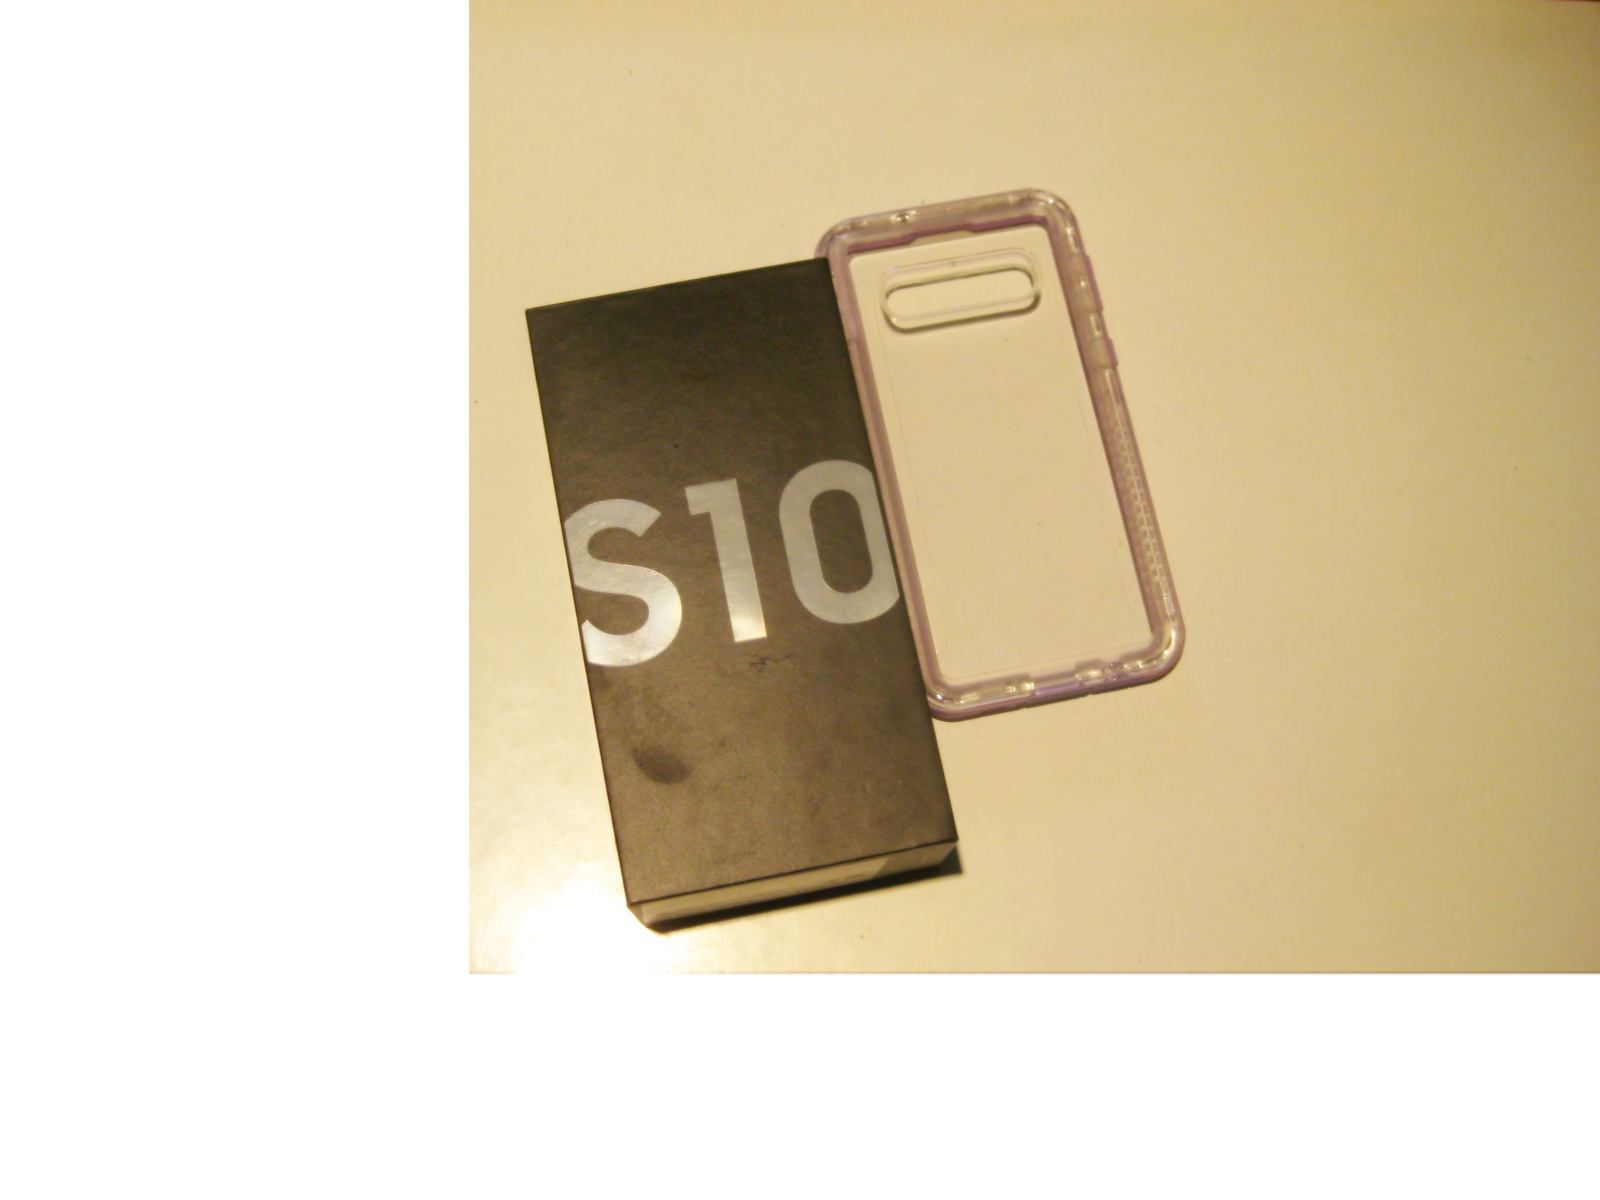 9.1/10 Fct. Unlocked 128gb Samsung Galaxy S10 G973U1 - $529.99